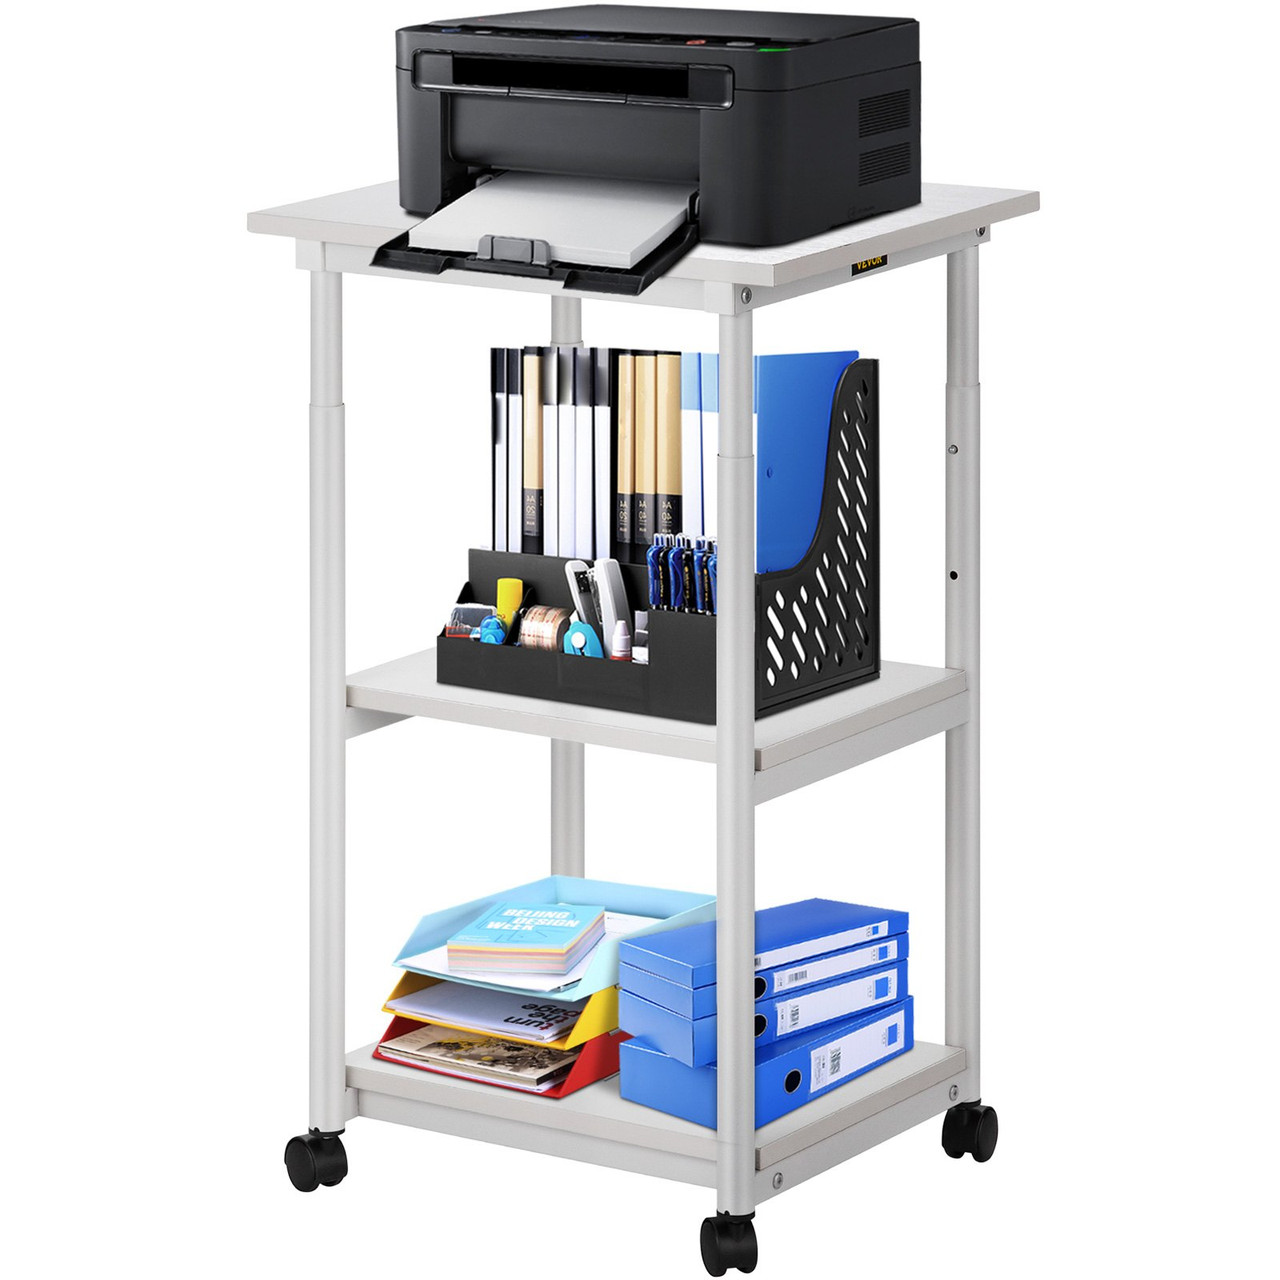 2 Tier Under Desk Printer Stand,Mobile Printer w/Storage Shelf